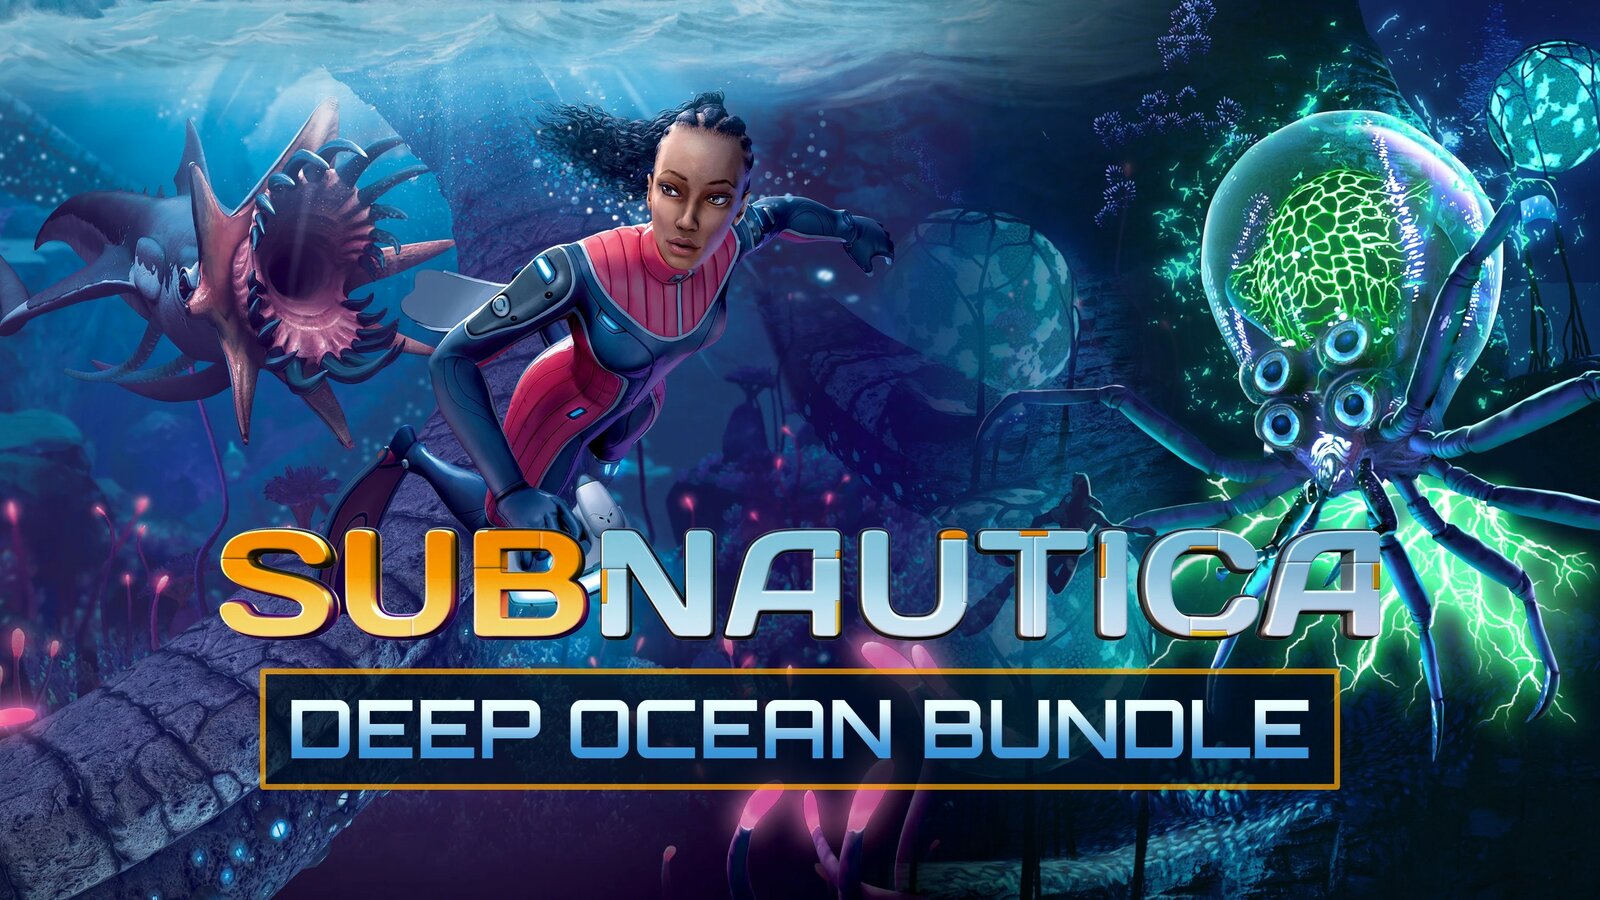 Subnautica - Deep Ocean Bundle